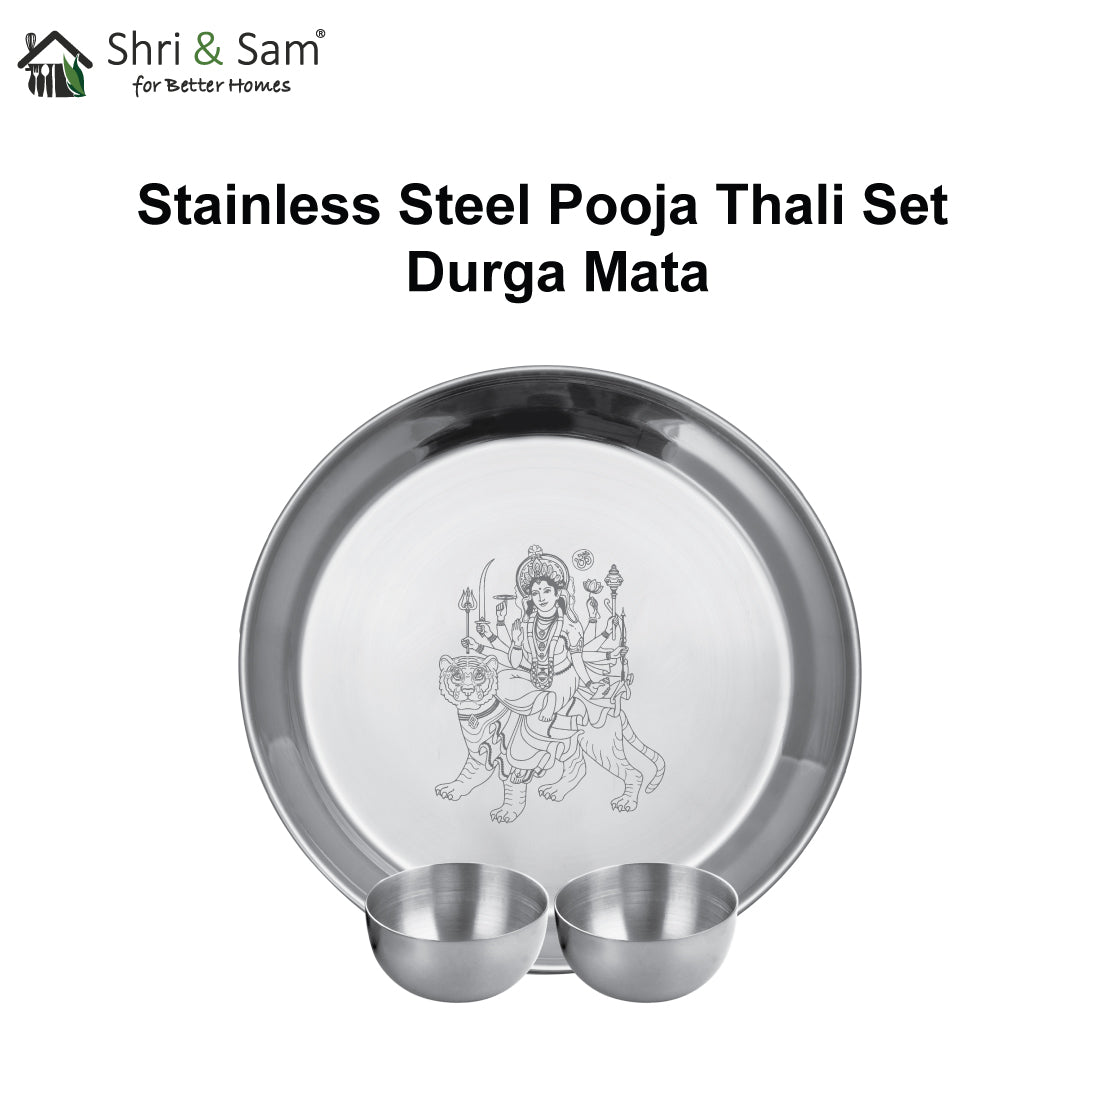 Stainless Steel Pooja Thali Set Durga Mata